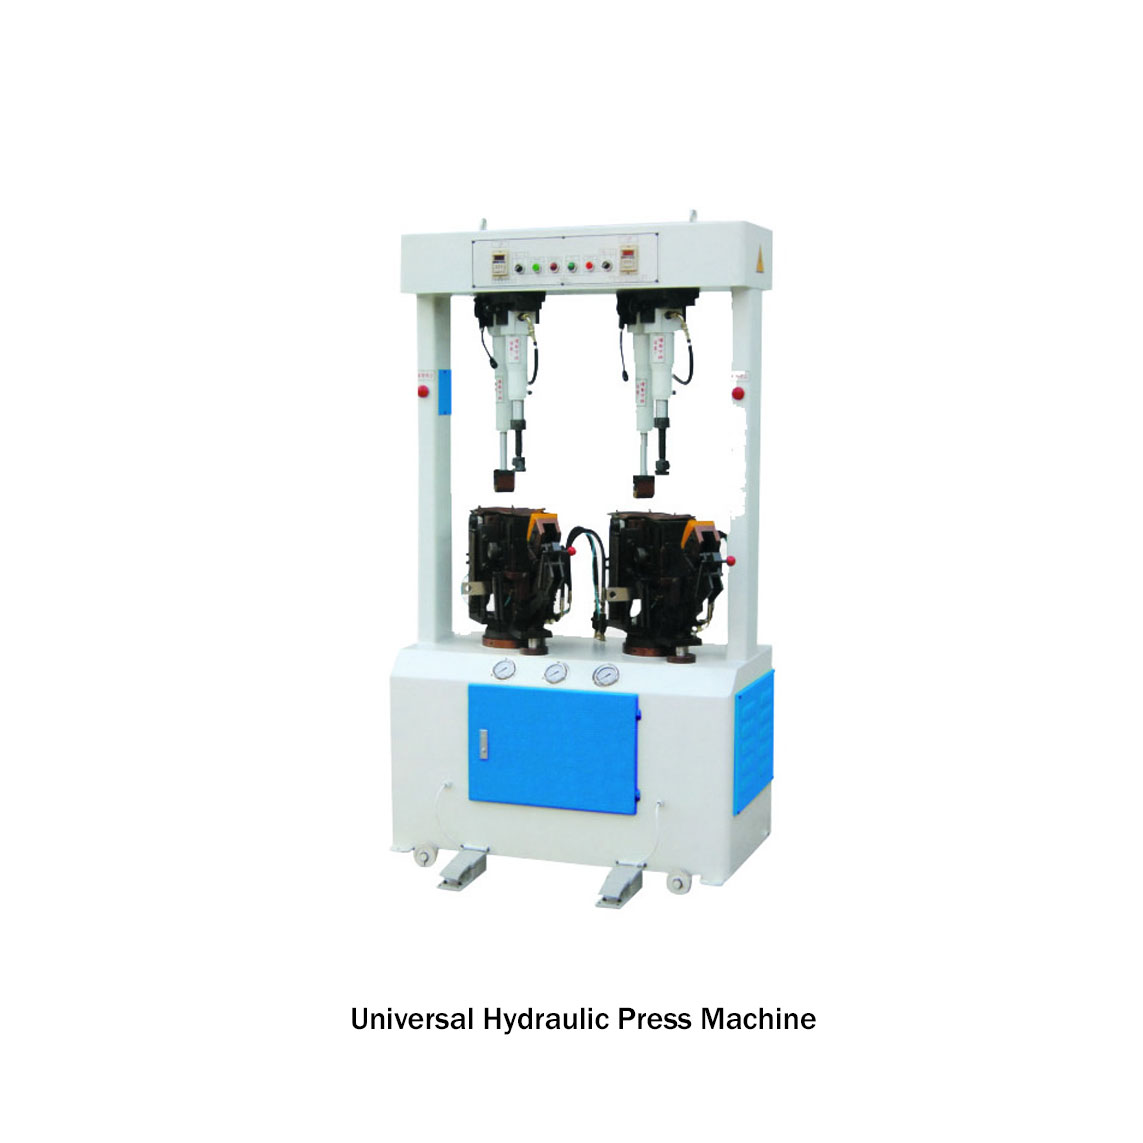 Universal Hydraulic Press Machine